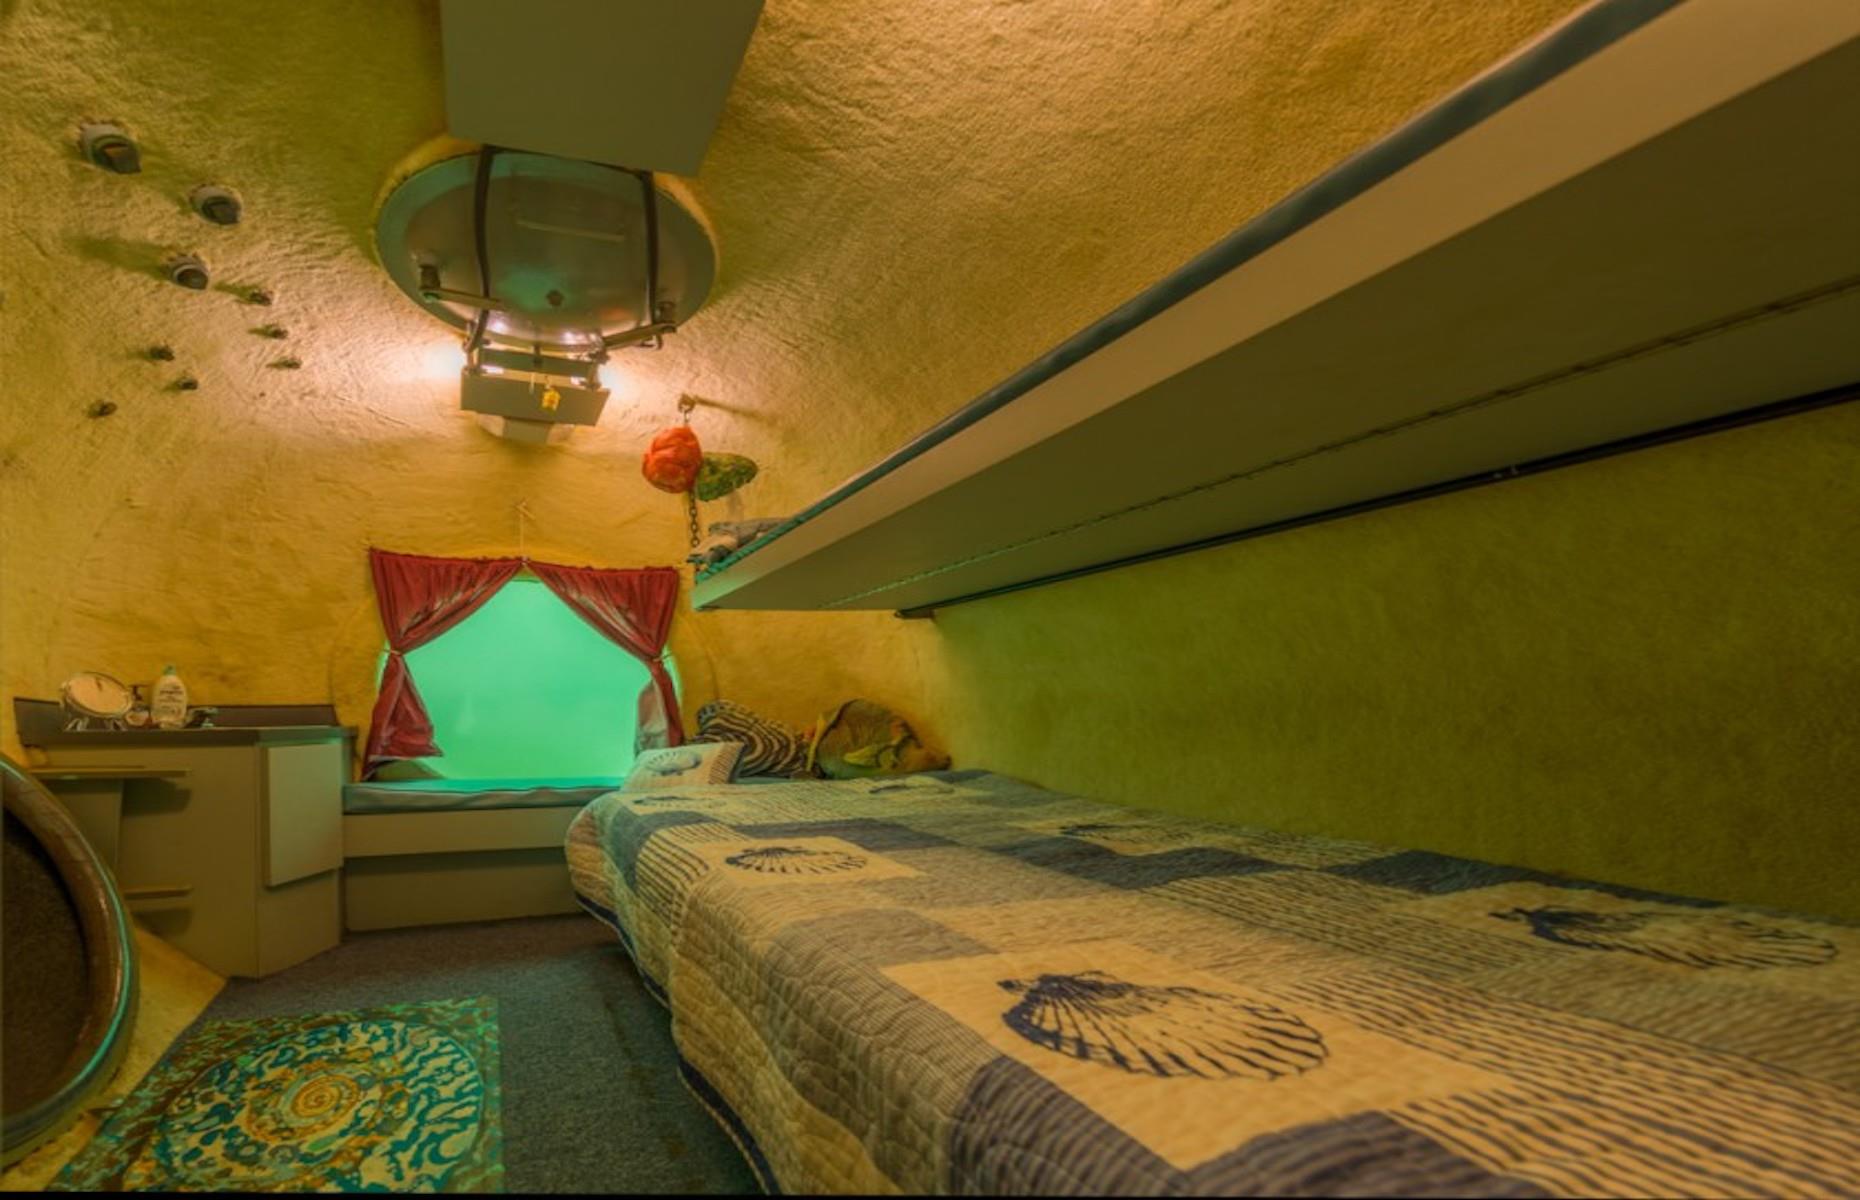 Underwater hotel rooms around the world that will blow your mind